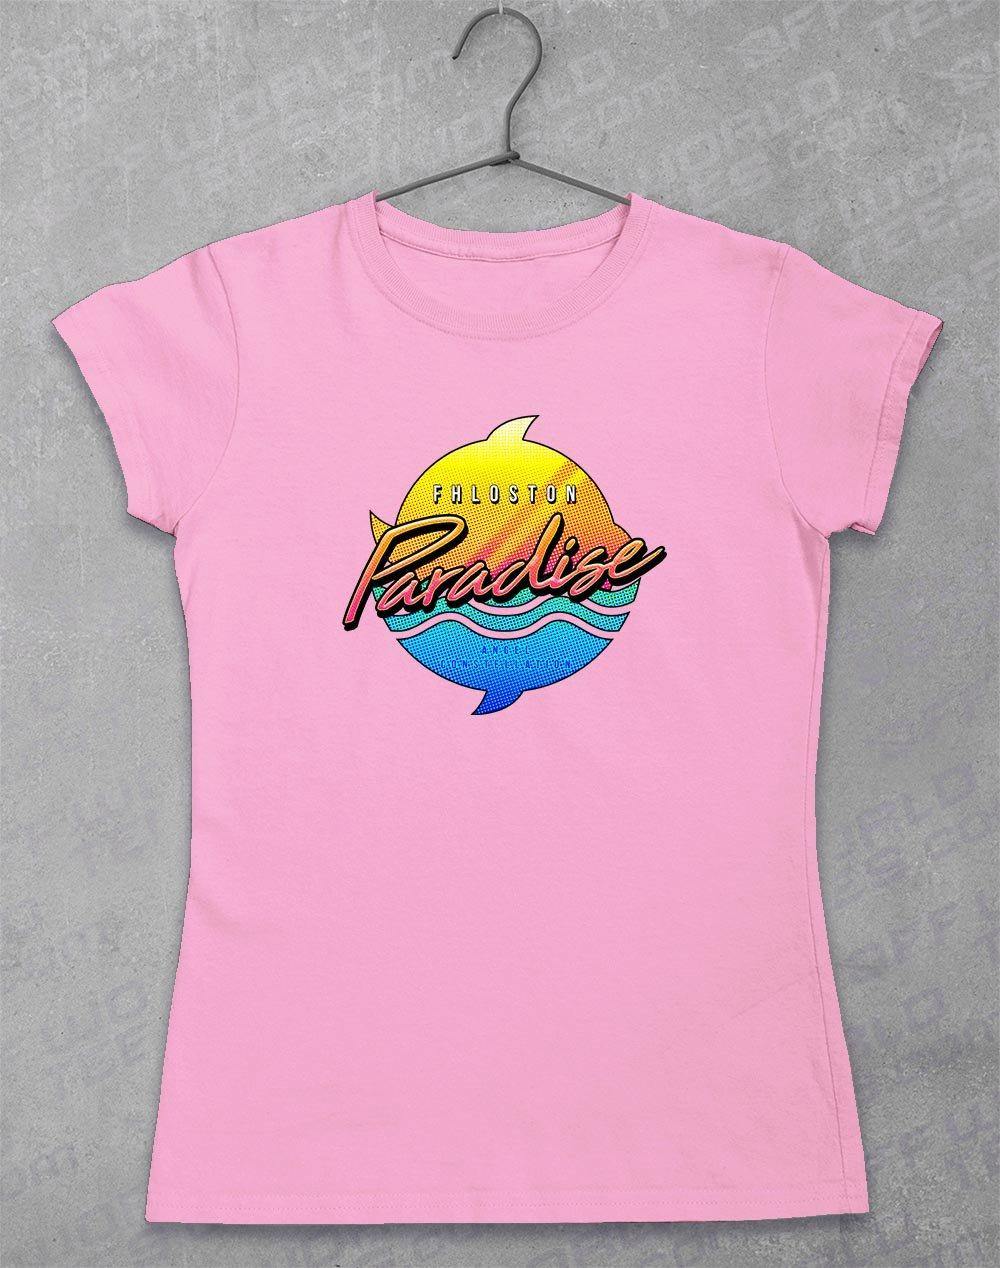 Fhloston Paradise Neon Women's T-Shirt  - Off World Tees